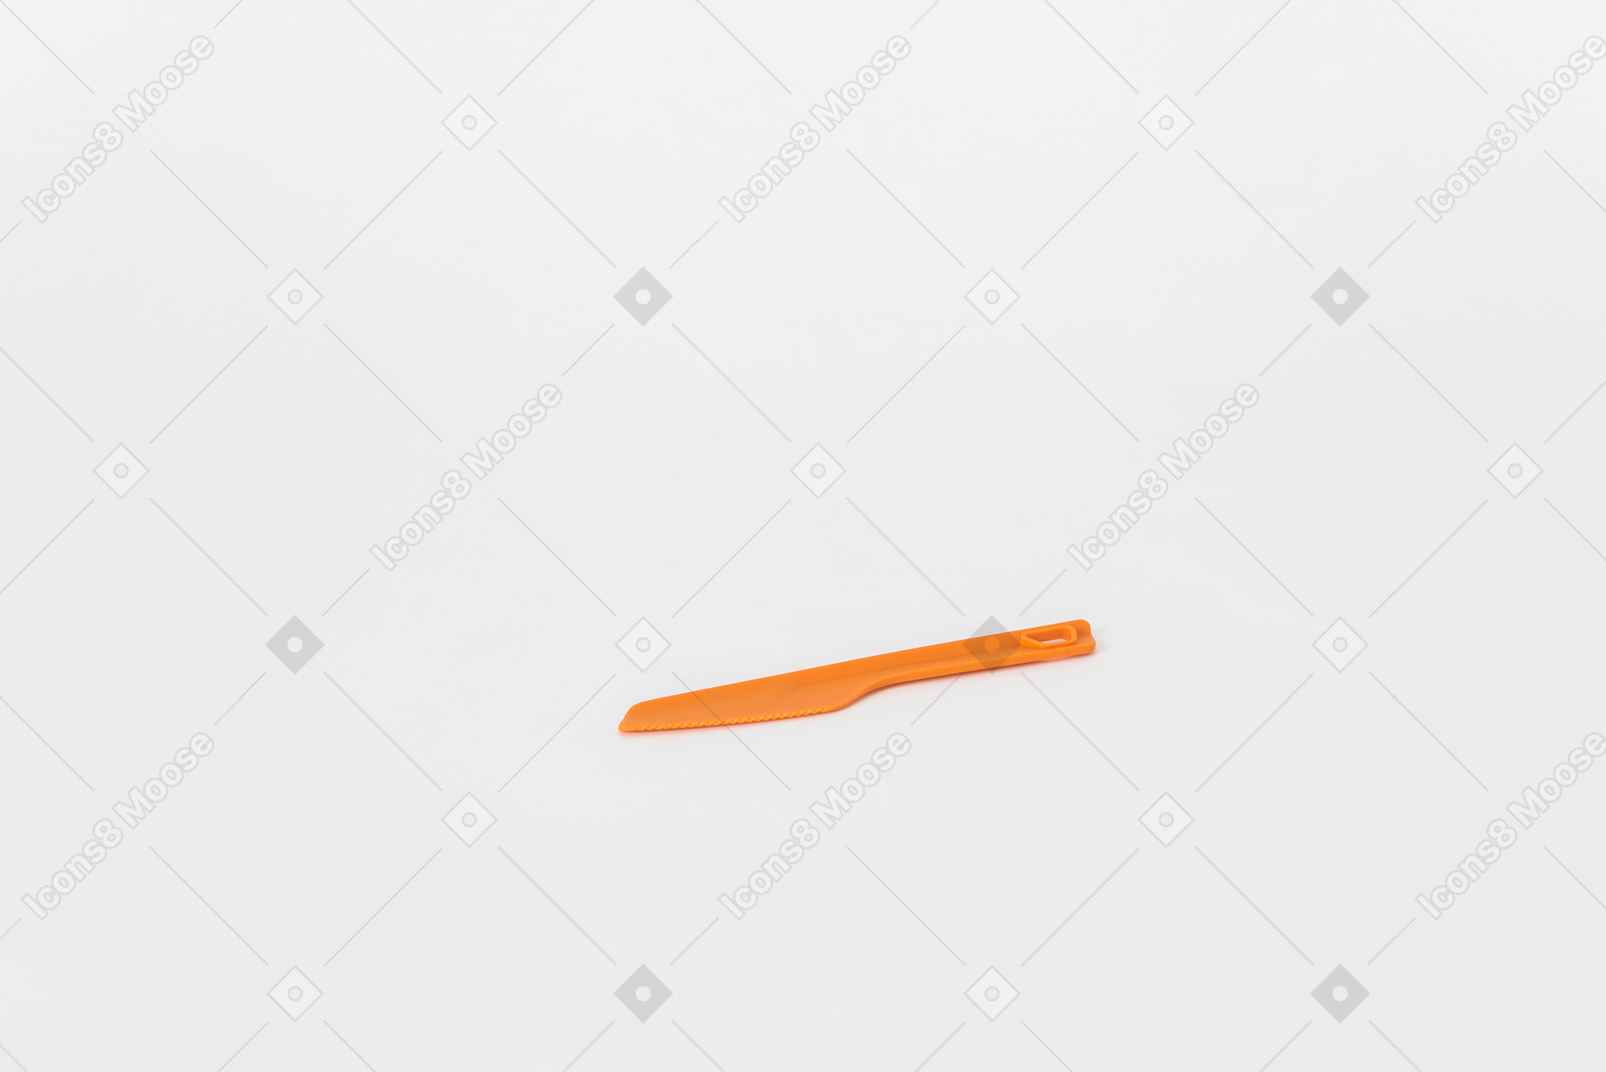 Plastic orange kitchen knife on a white background